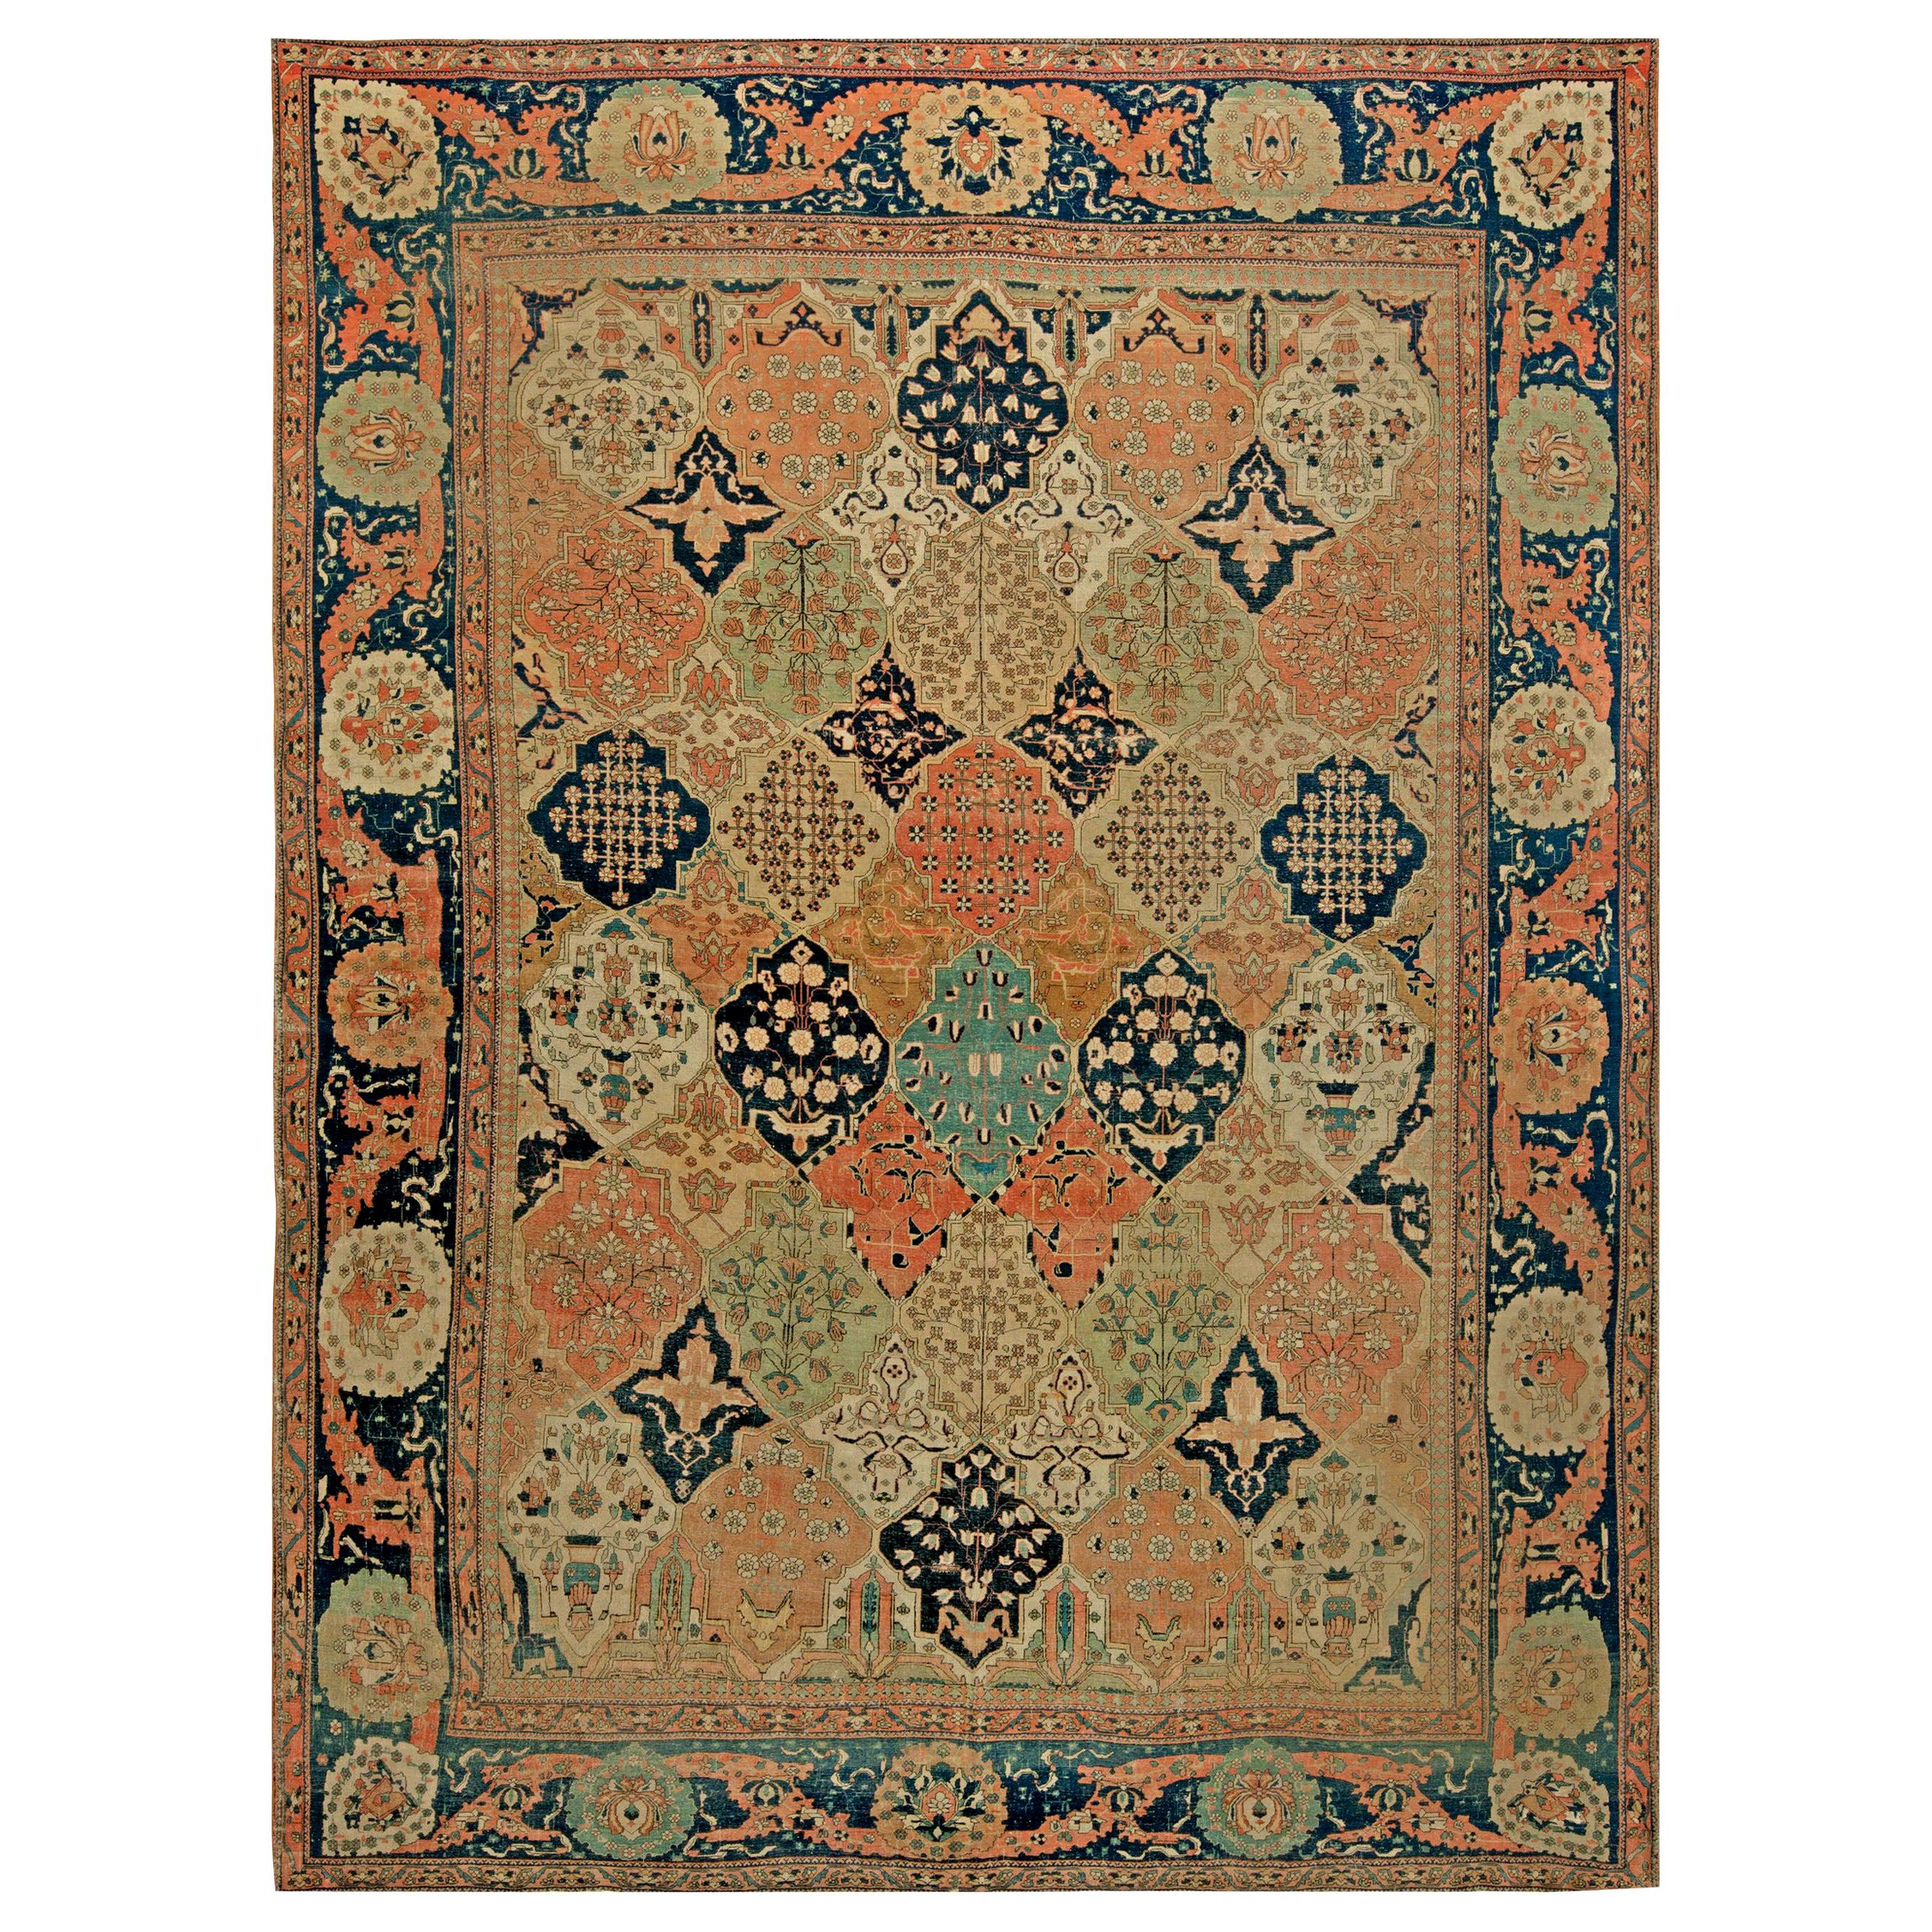 Antique Persian Mohtashem Kashan Handmade Wool Rug